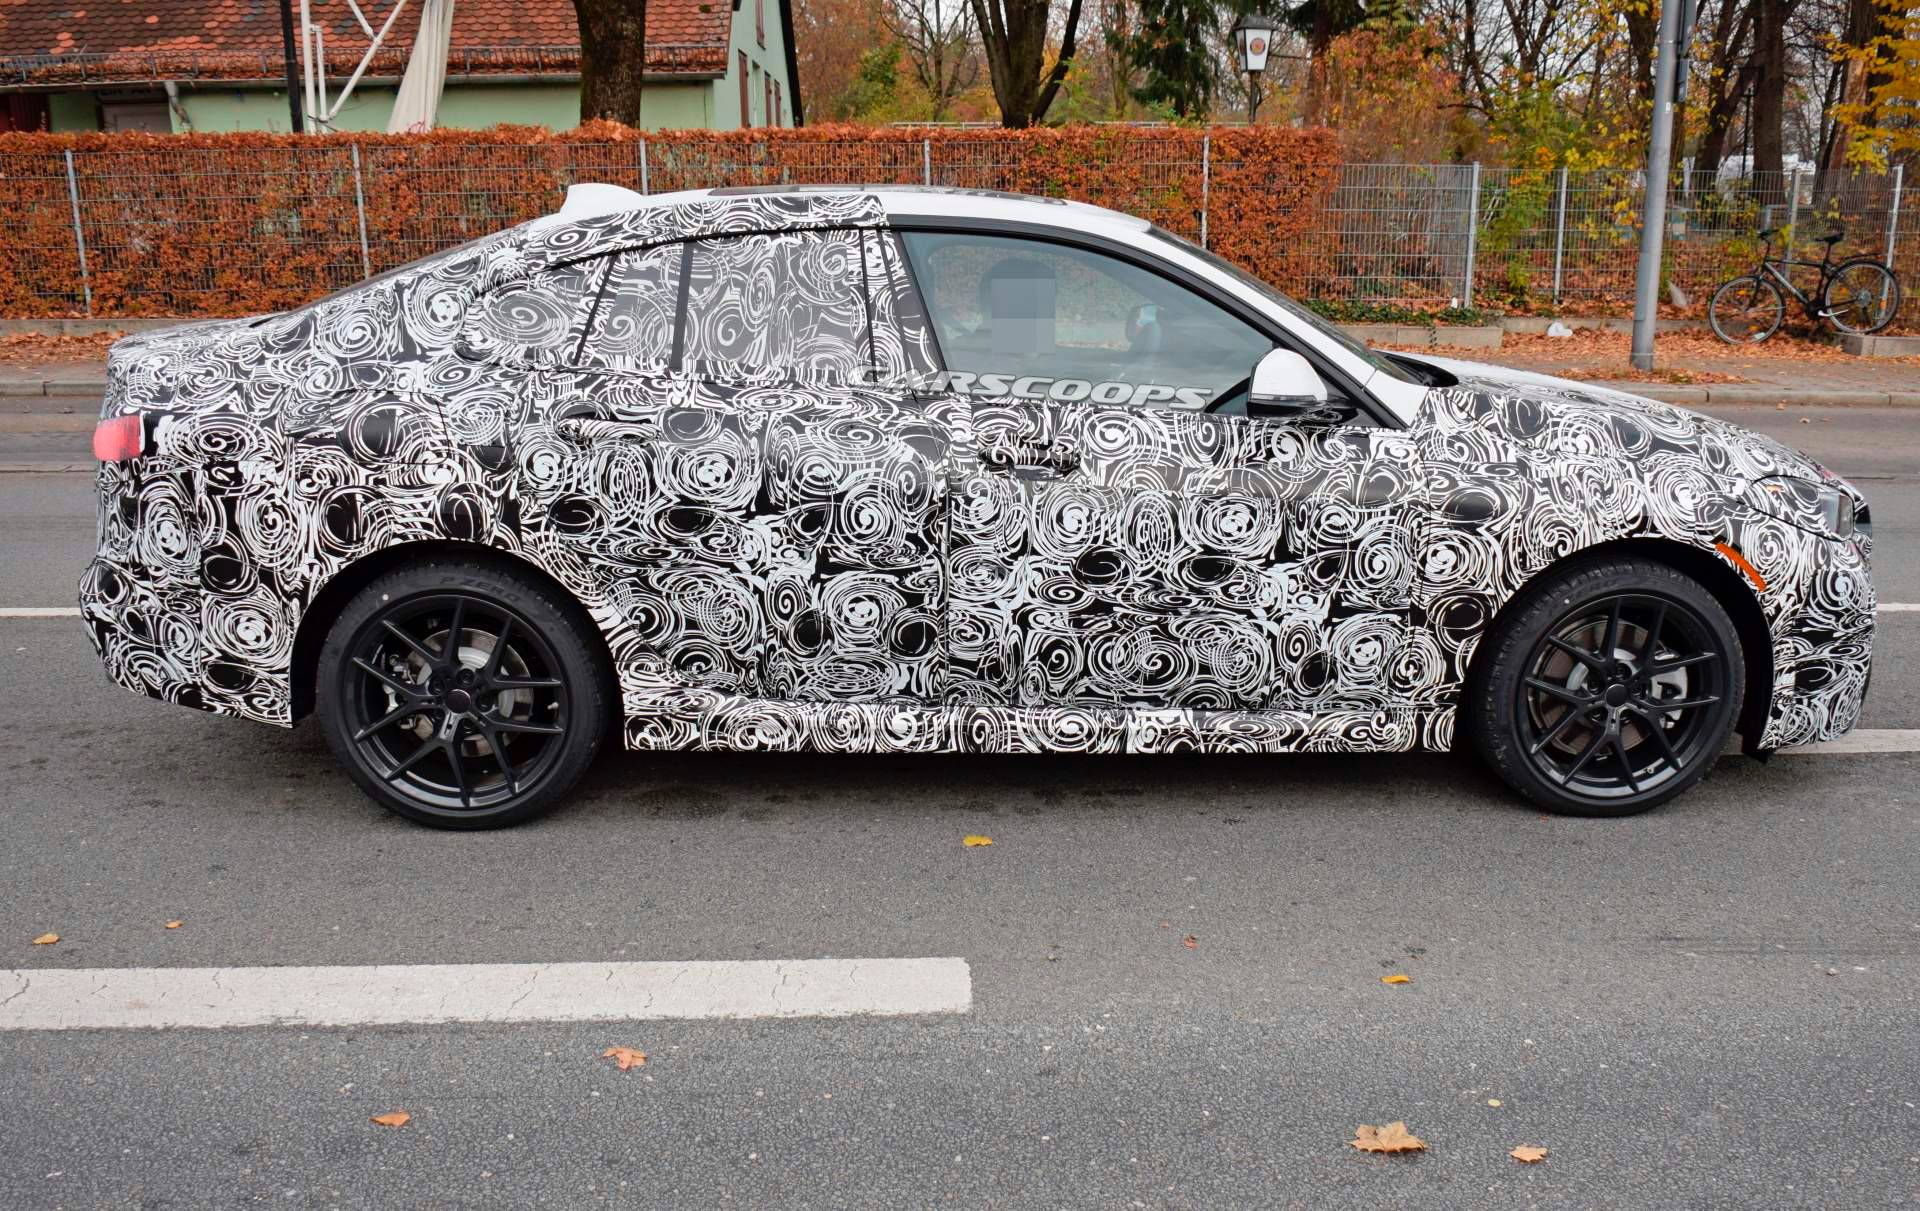 2020 BMW 2 Serisi Gran Coupe resim galerisi (15.11.2018)